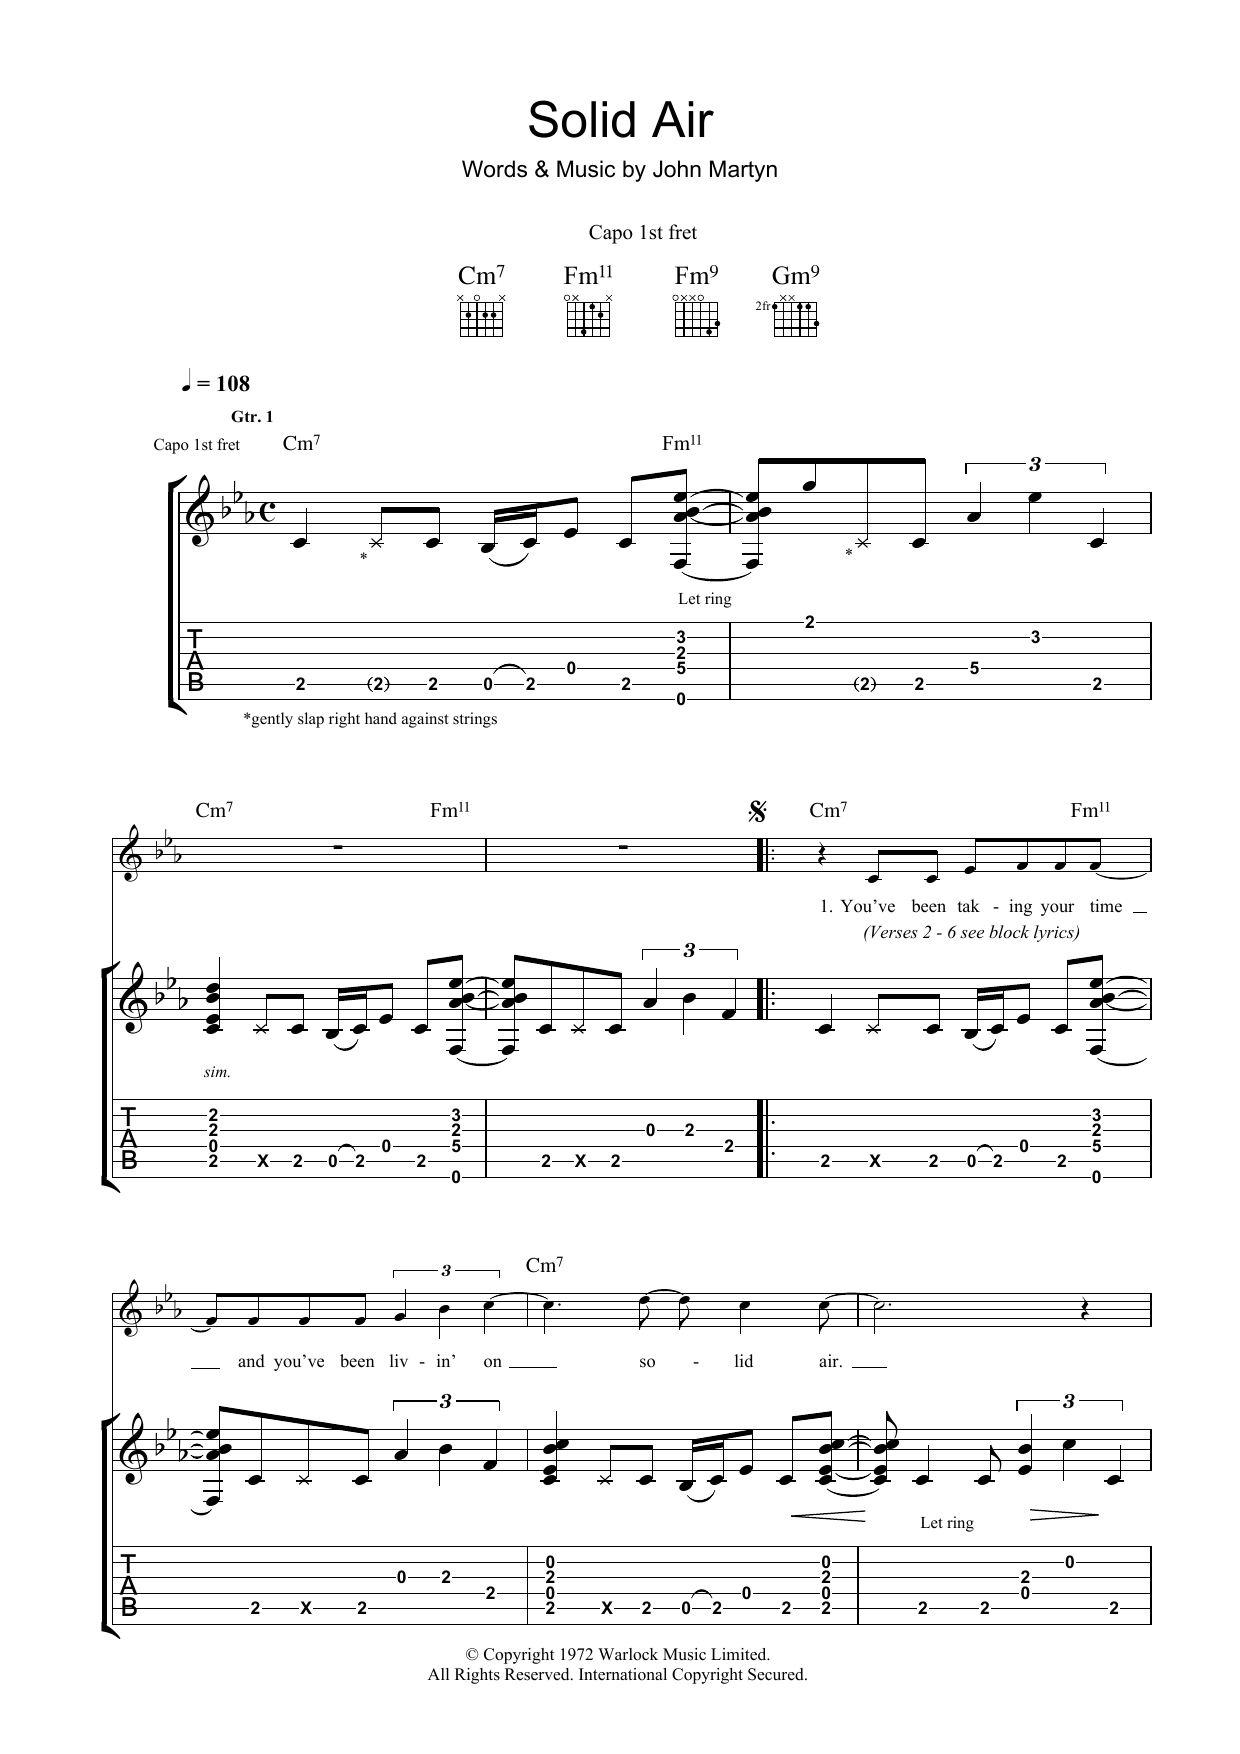 John Martyn Solid Air Sheet Music Notes & Chords for Lyrics & Chords - Download or Print PDF